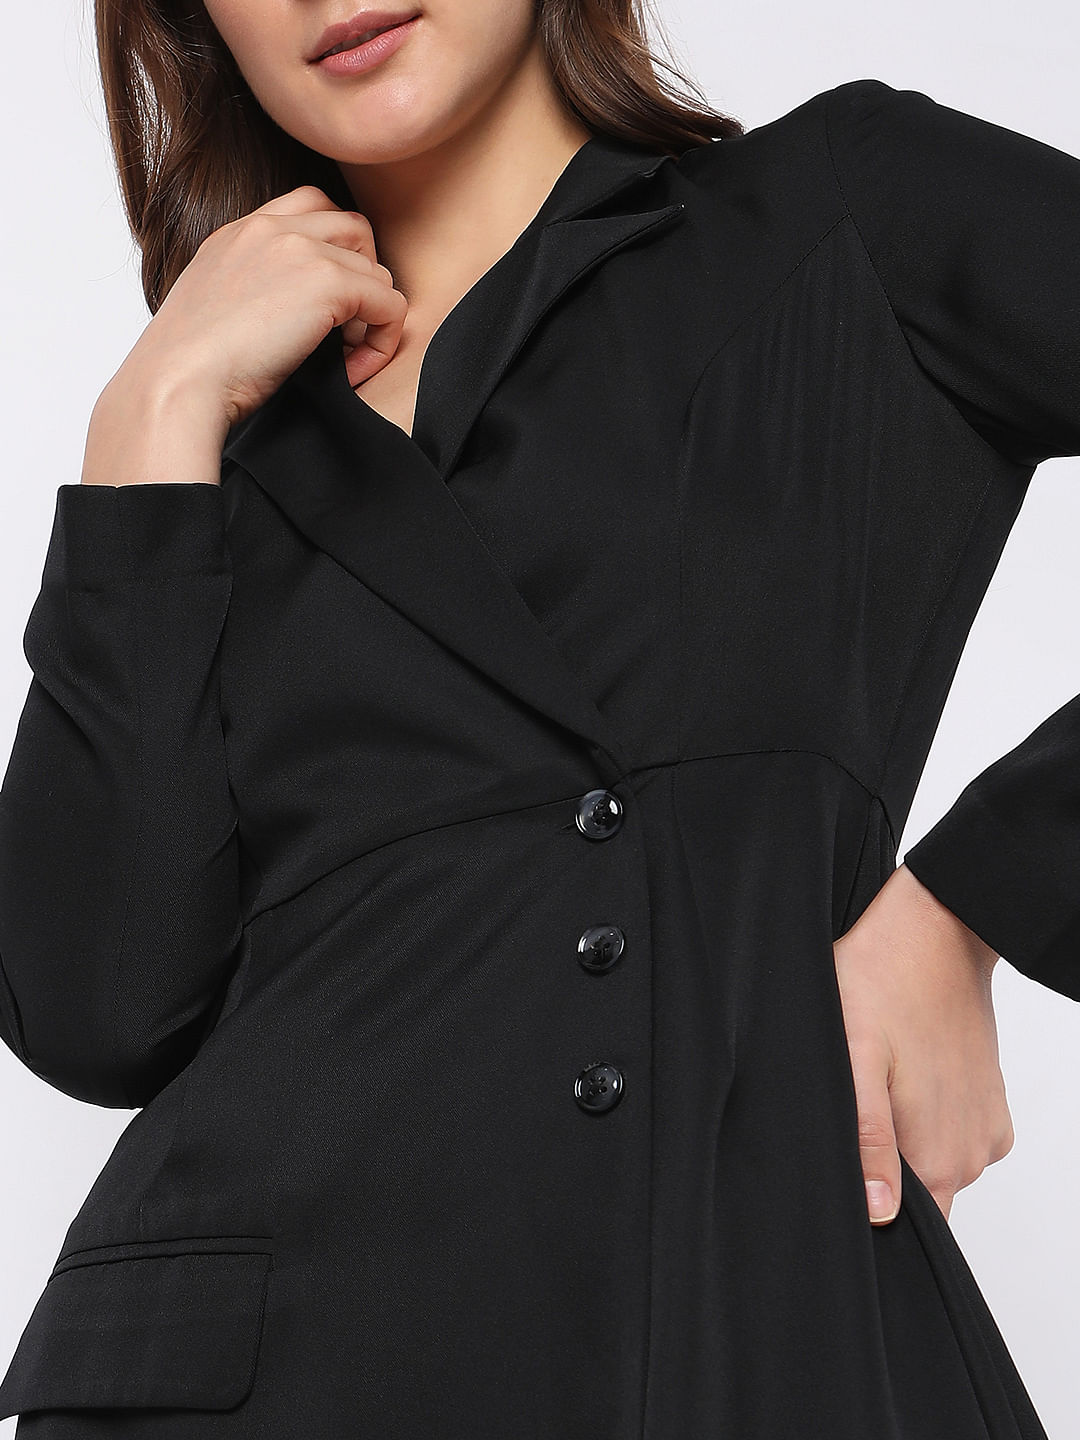 Fitted blazer dress - Black - Ladies | H&M IN